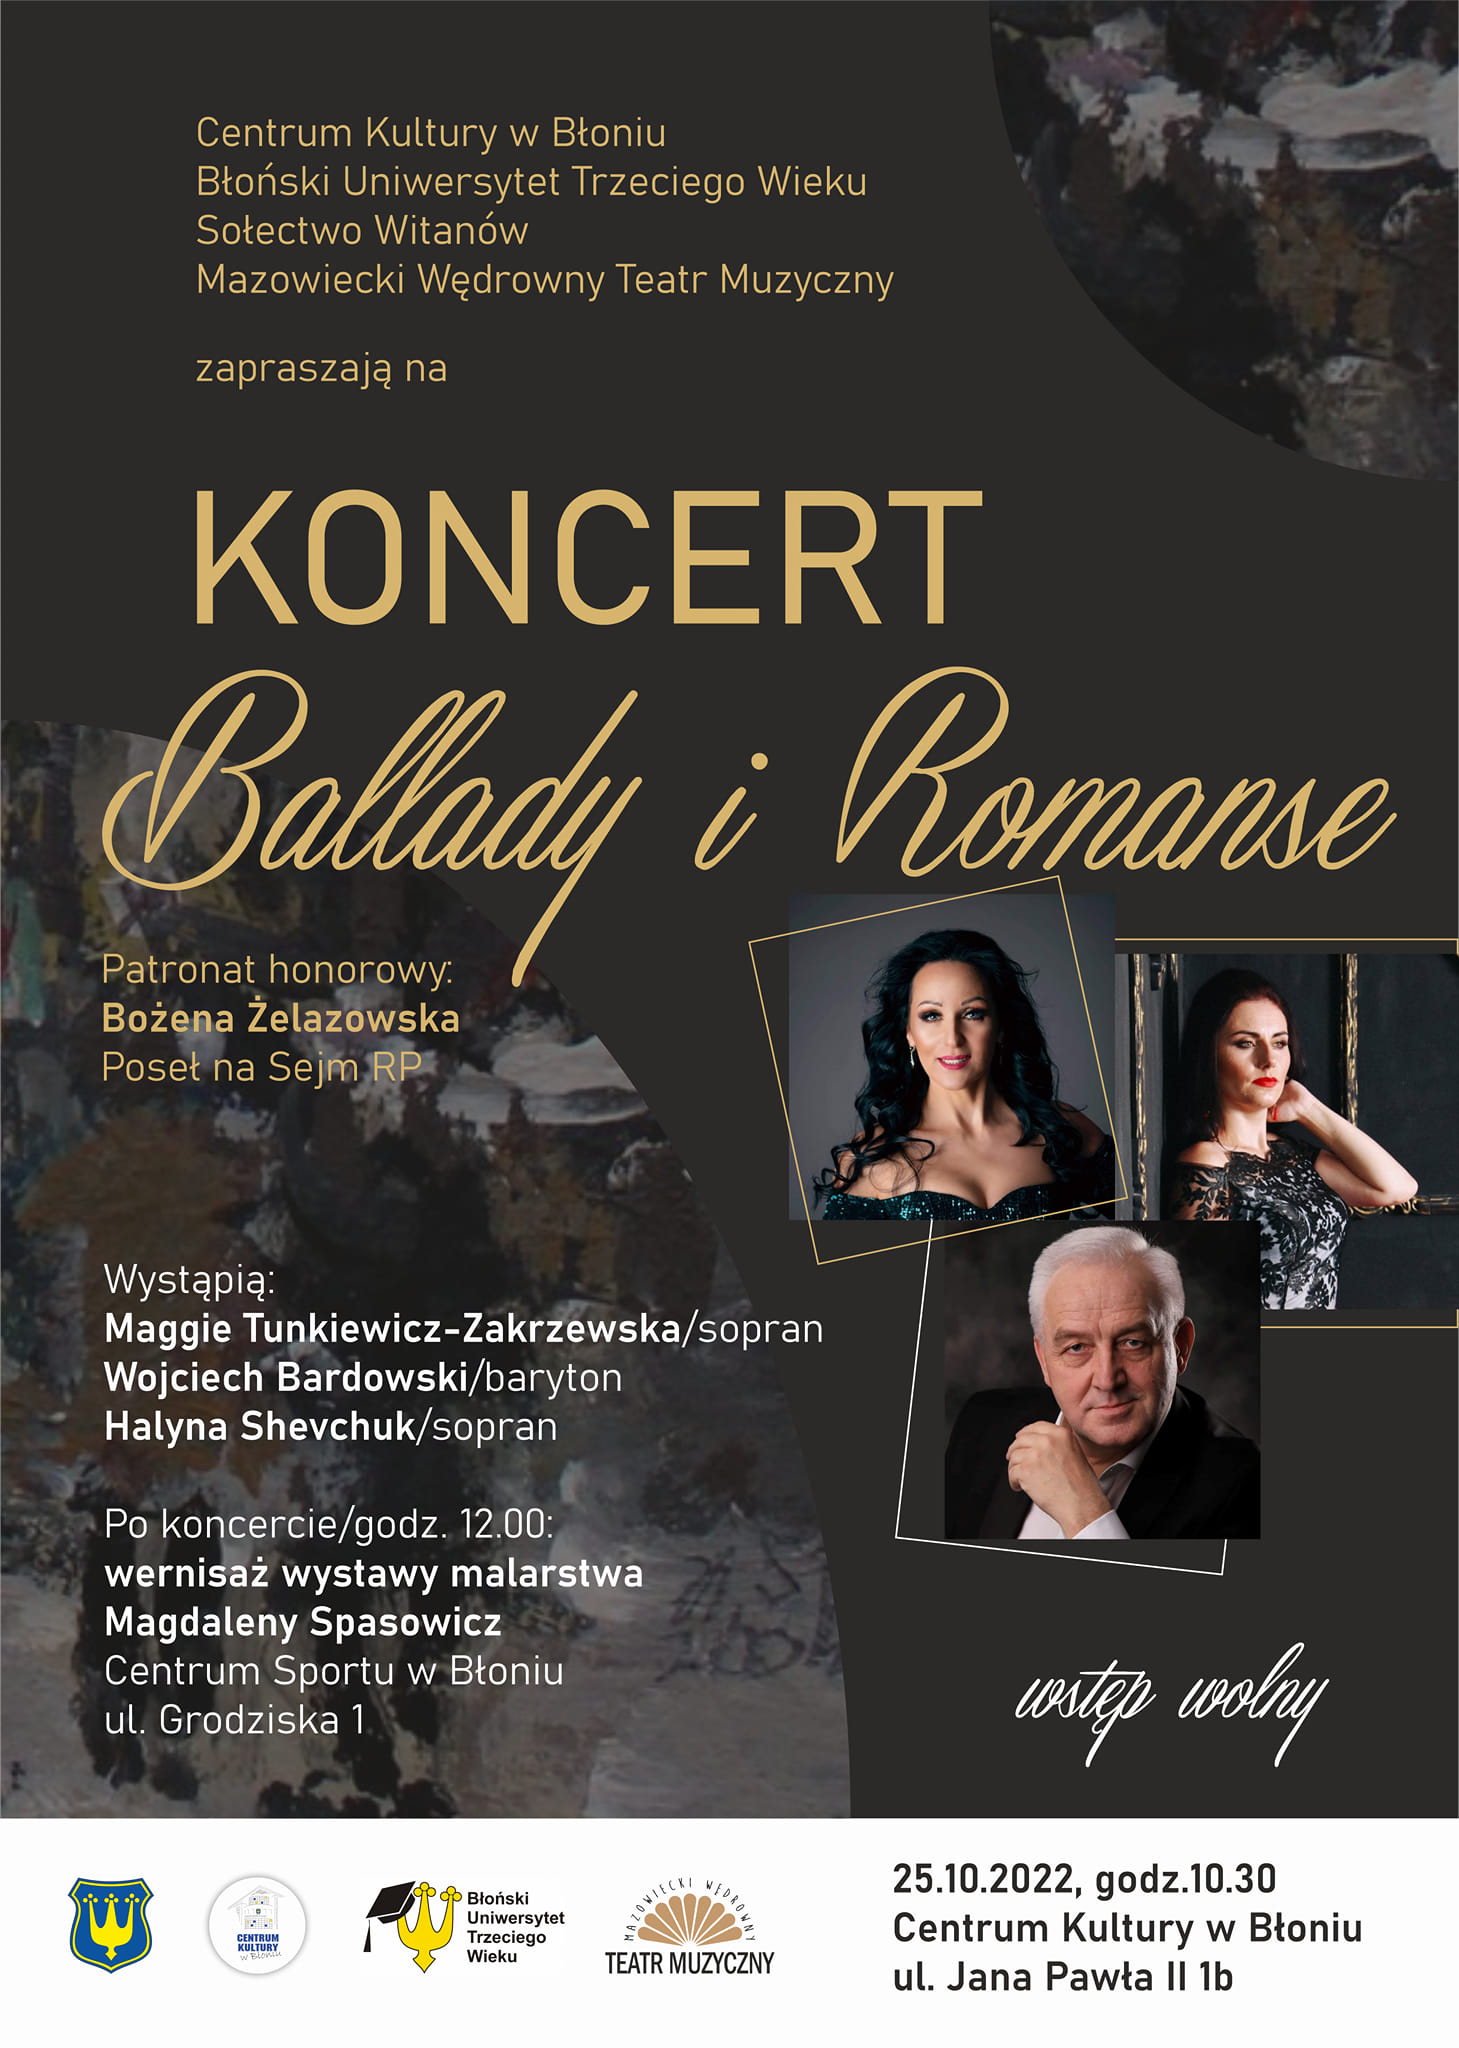 Concert "Ballady i Romanse"  